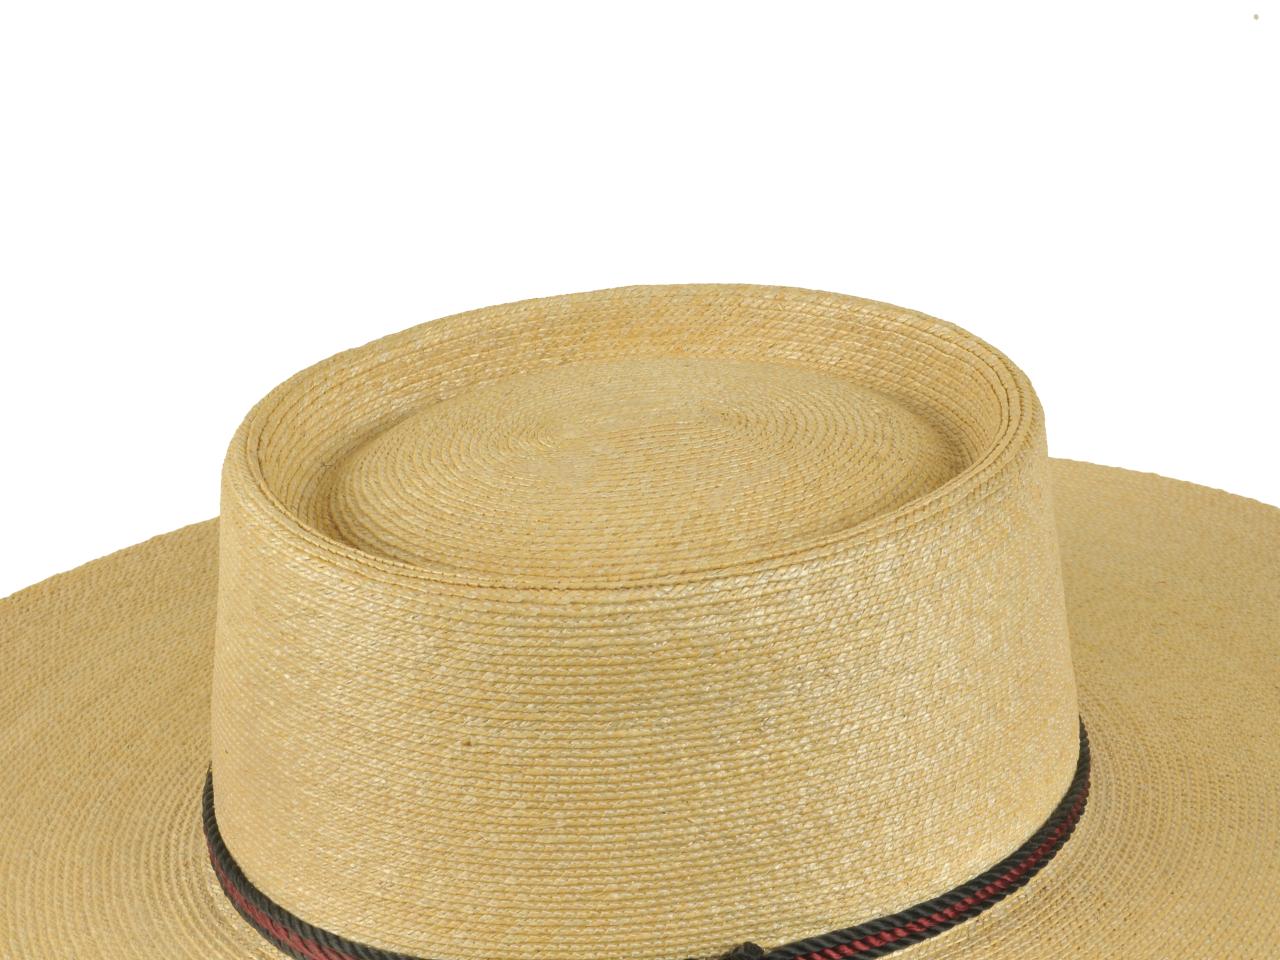 Detalle de copa de sombrero de huaso, tejido en paja teatina natural